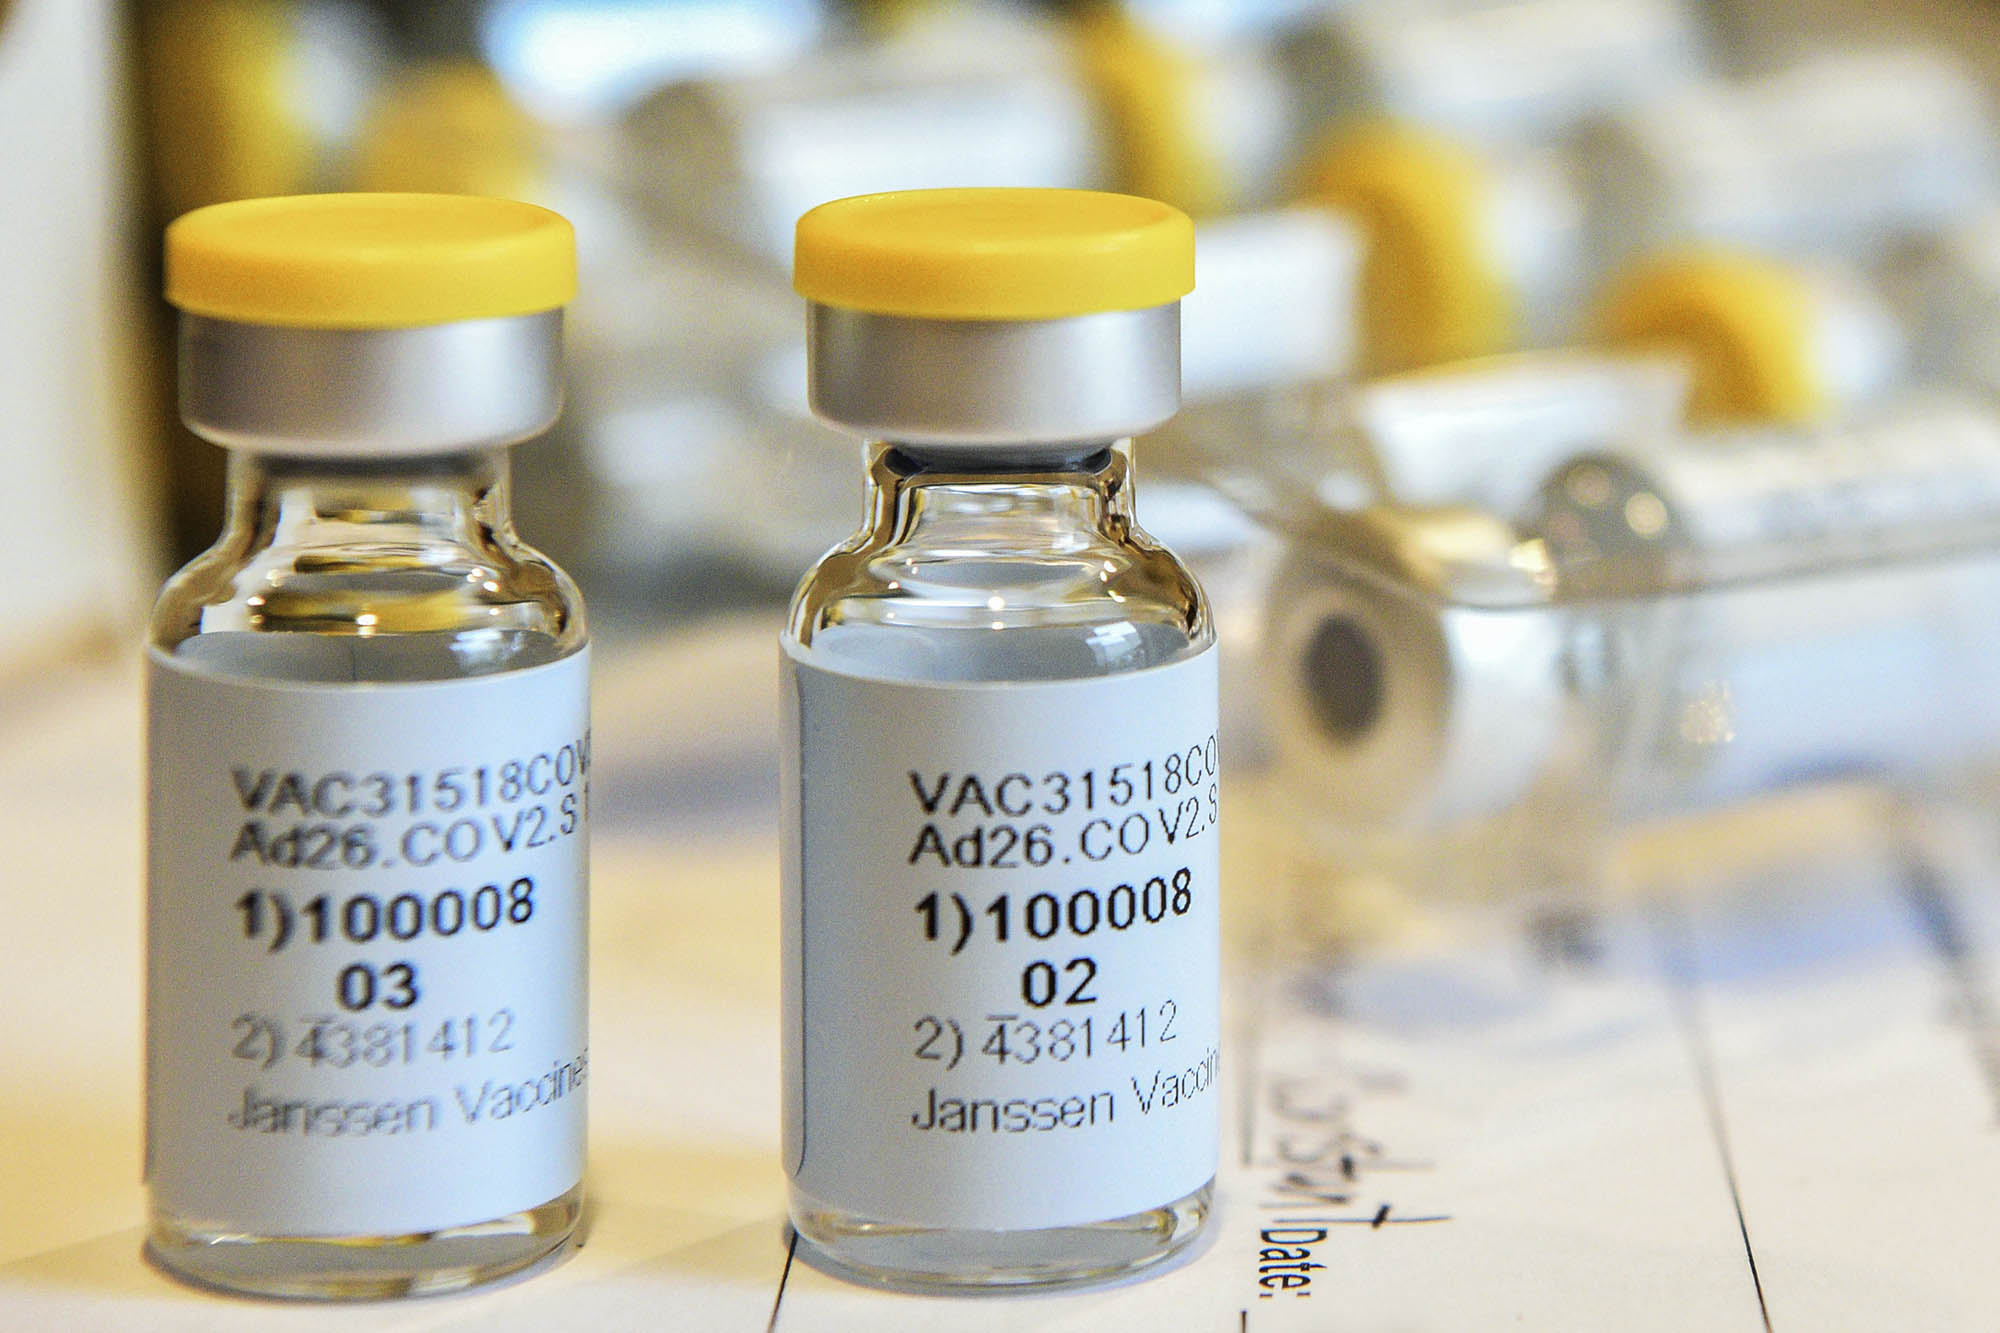 vials of Covid-19 vaccine